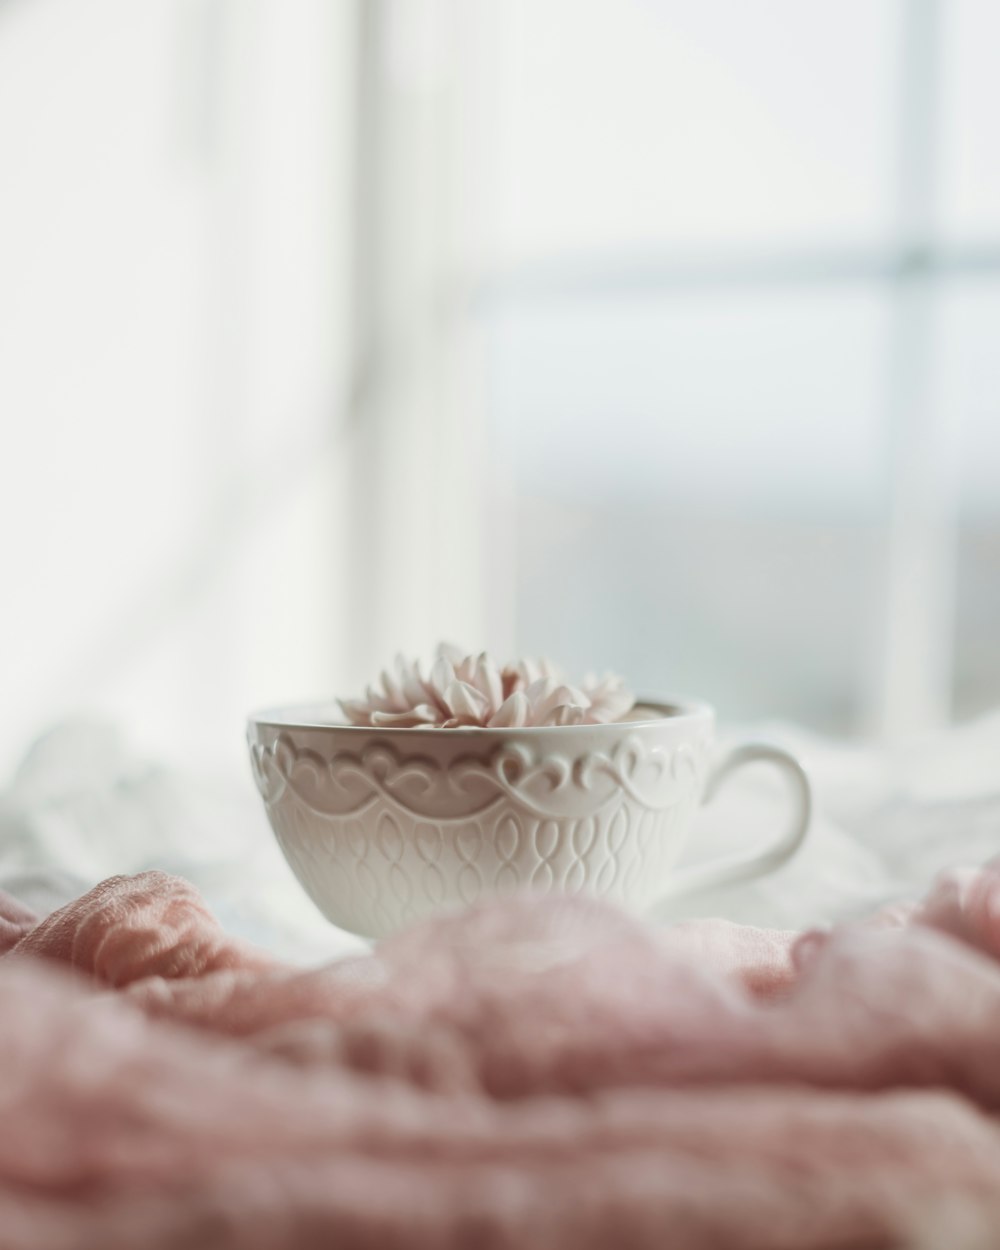 white ceramic teacup on pink textile